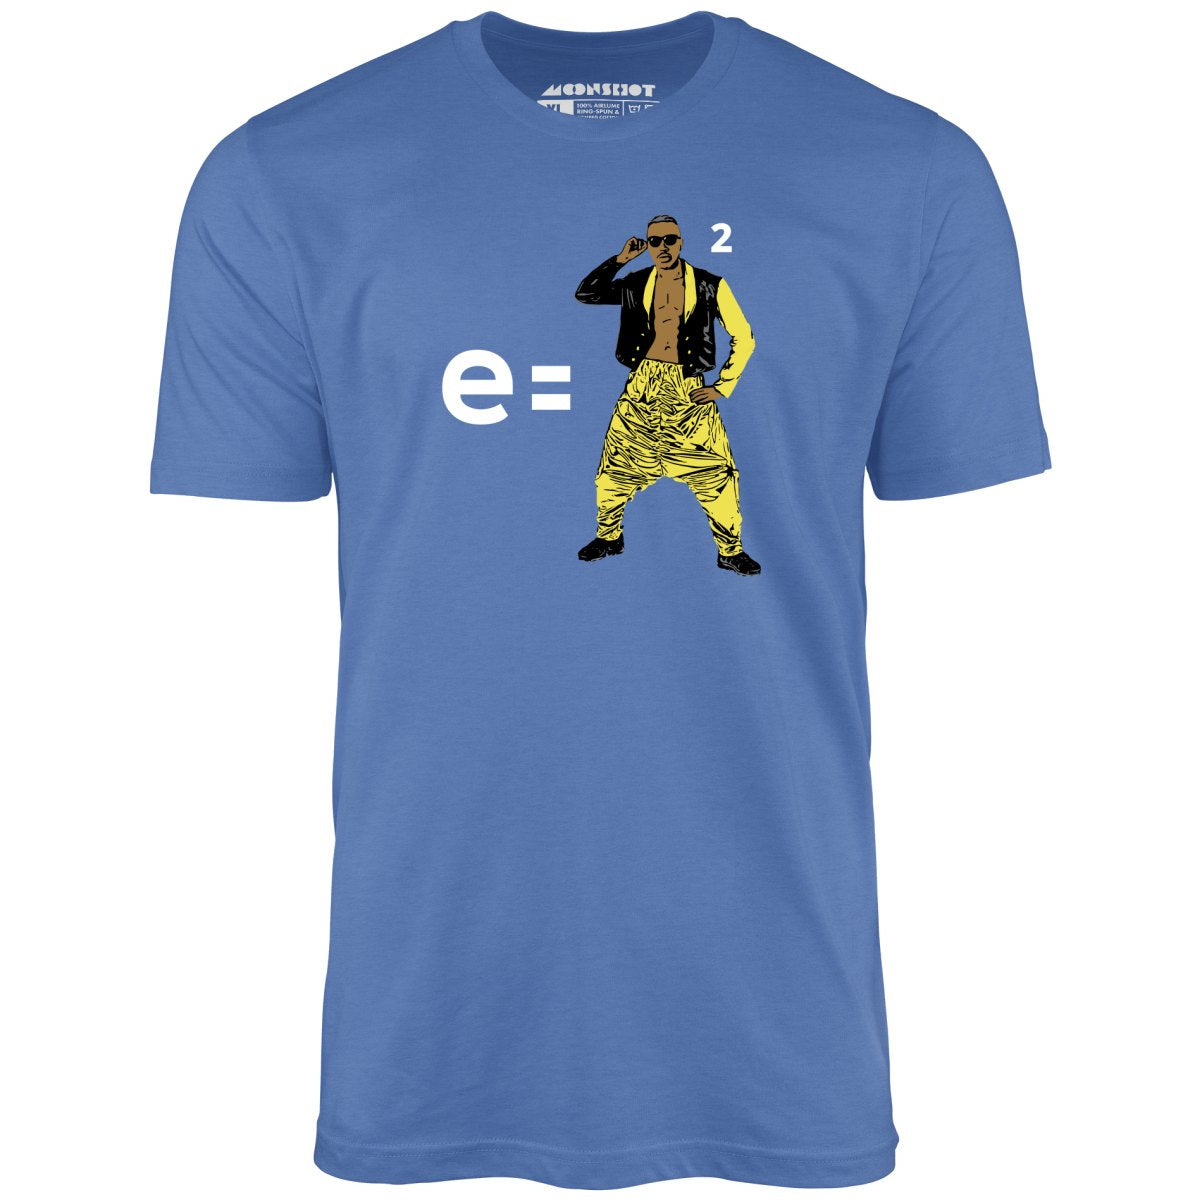 e=mc Hammer Squared - Unisex T-Shirt